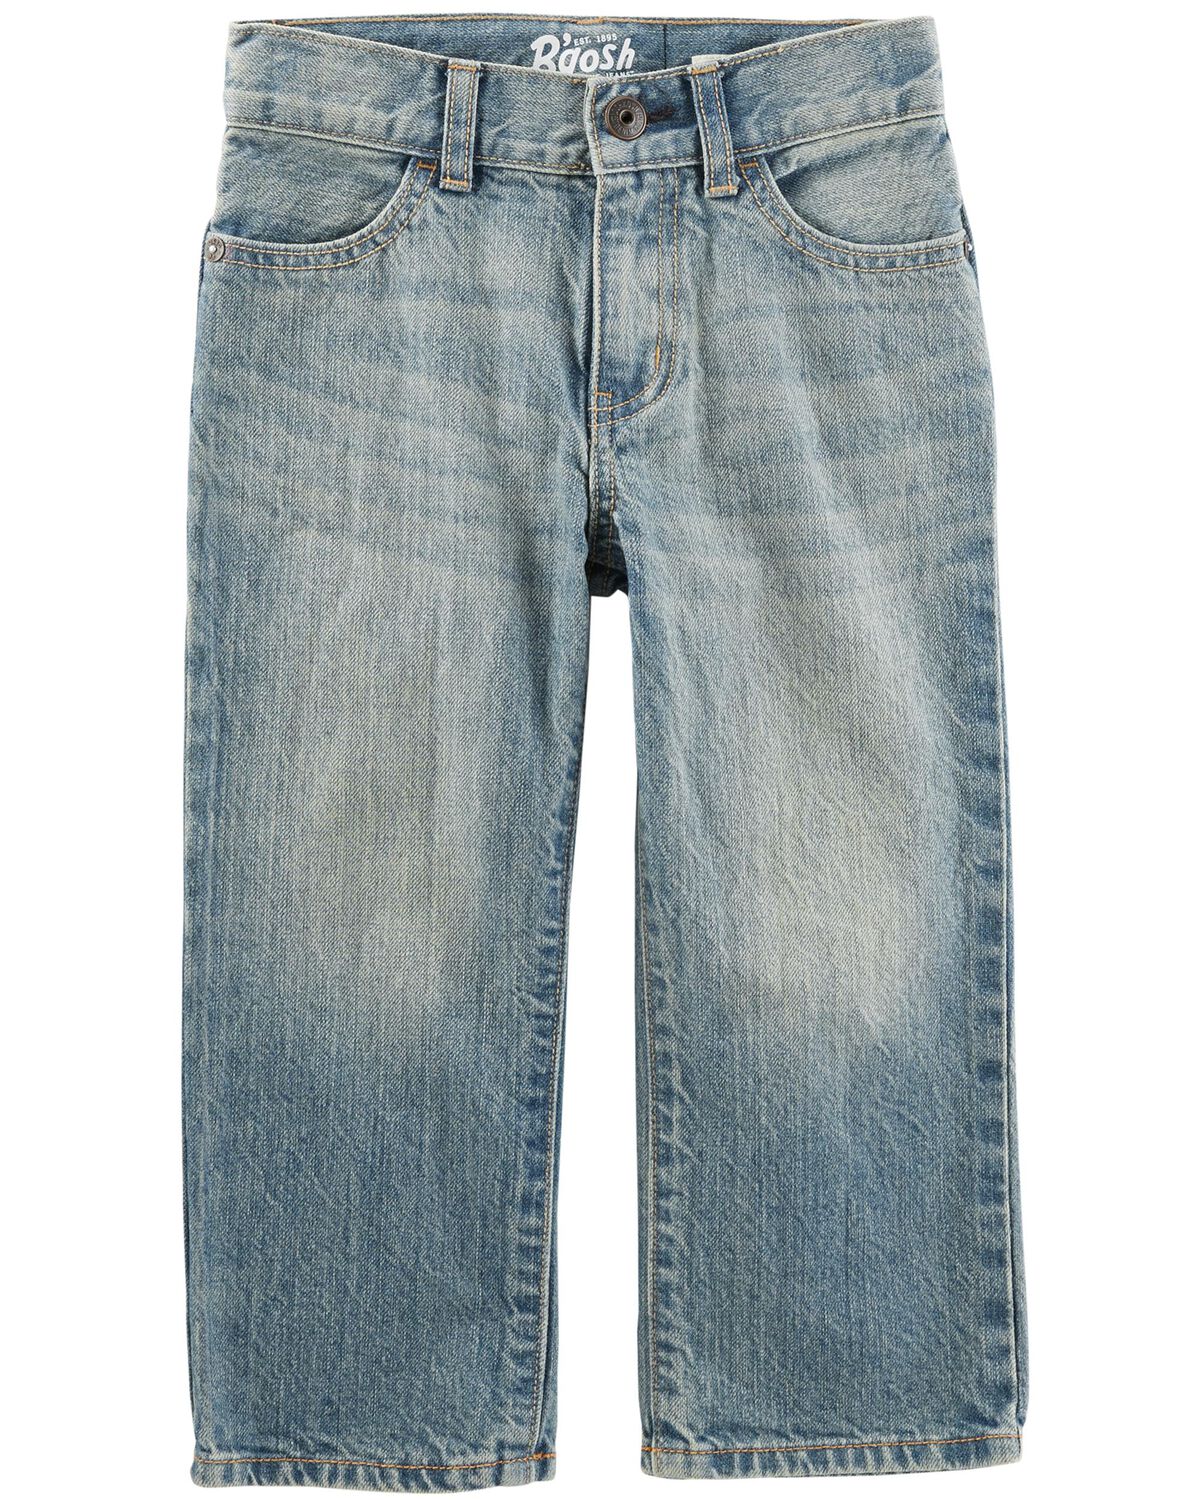 Classic Jeans -Natural Indigo Wash